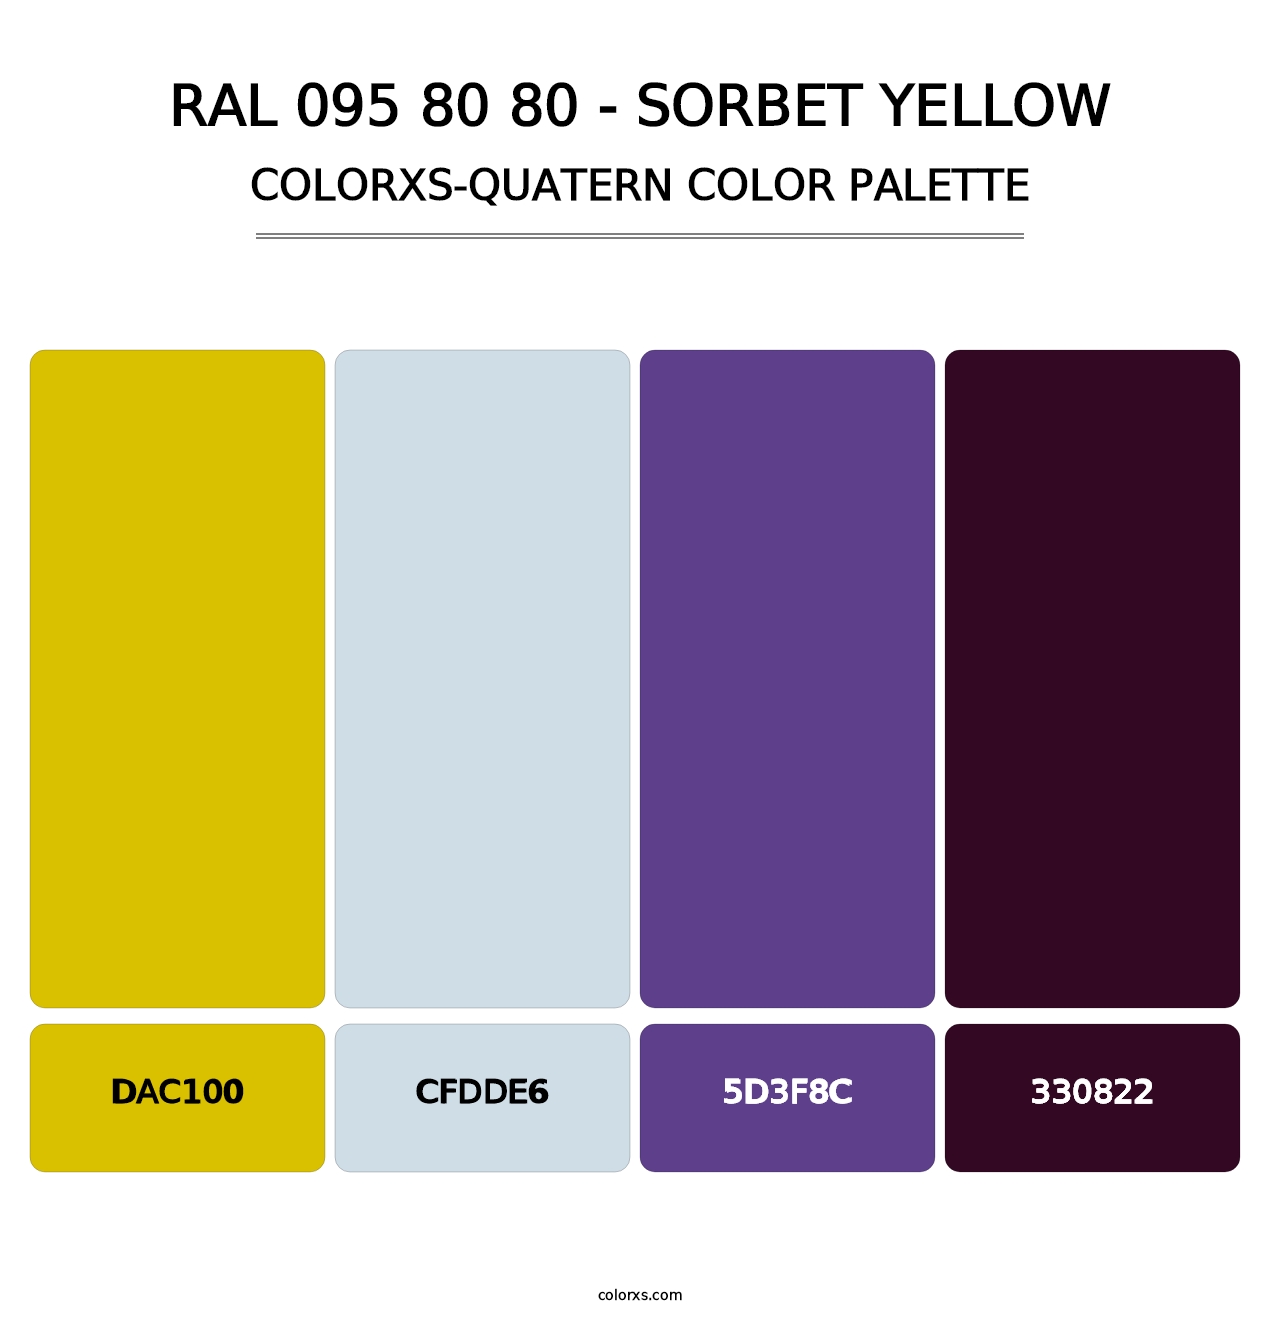 RAL 095 80 80 - Sorbet Yellow - Colorxs Quatern Palette